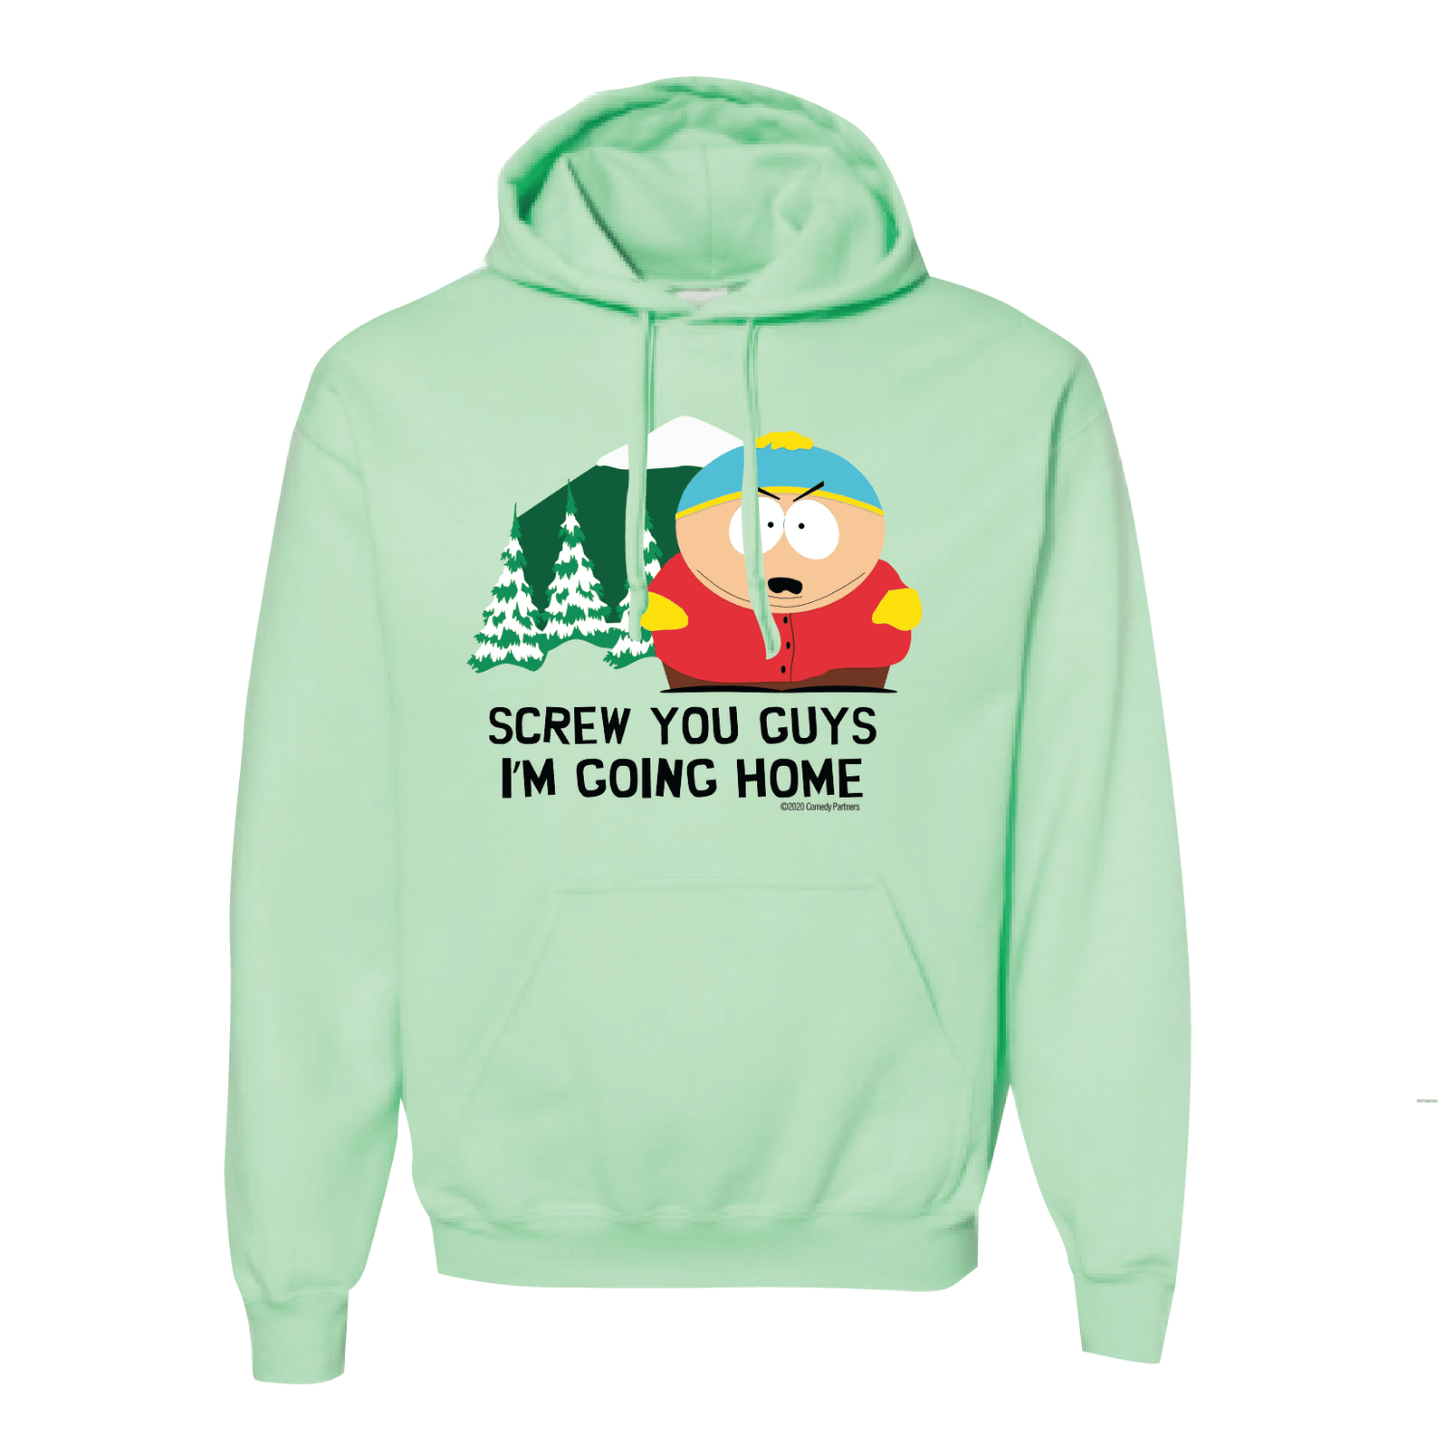 South Park Cartman Screw You Guys Hooded Sweatshirt - Paramount Shop